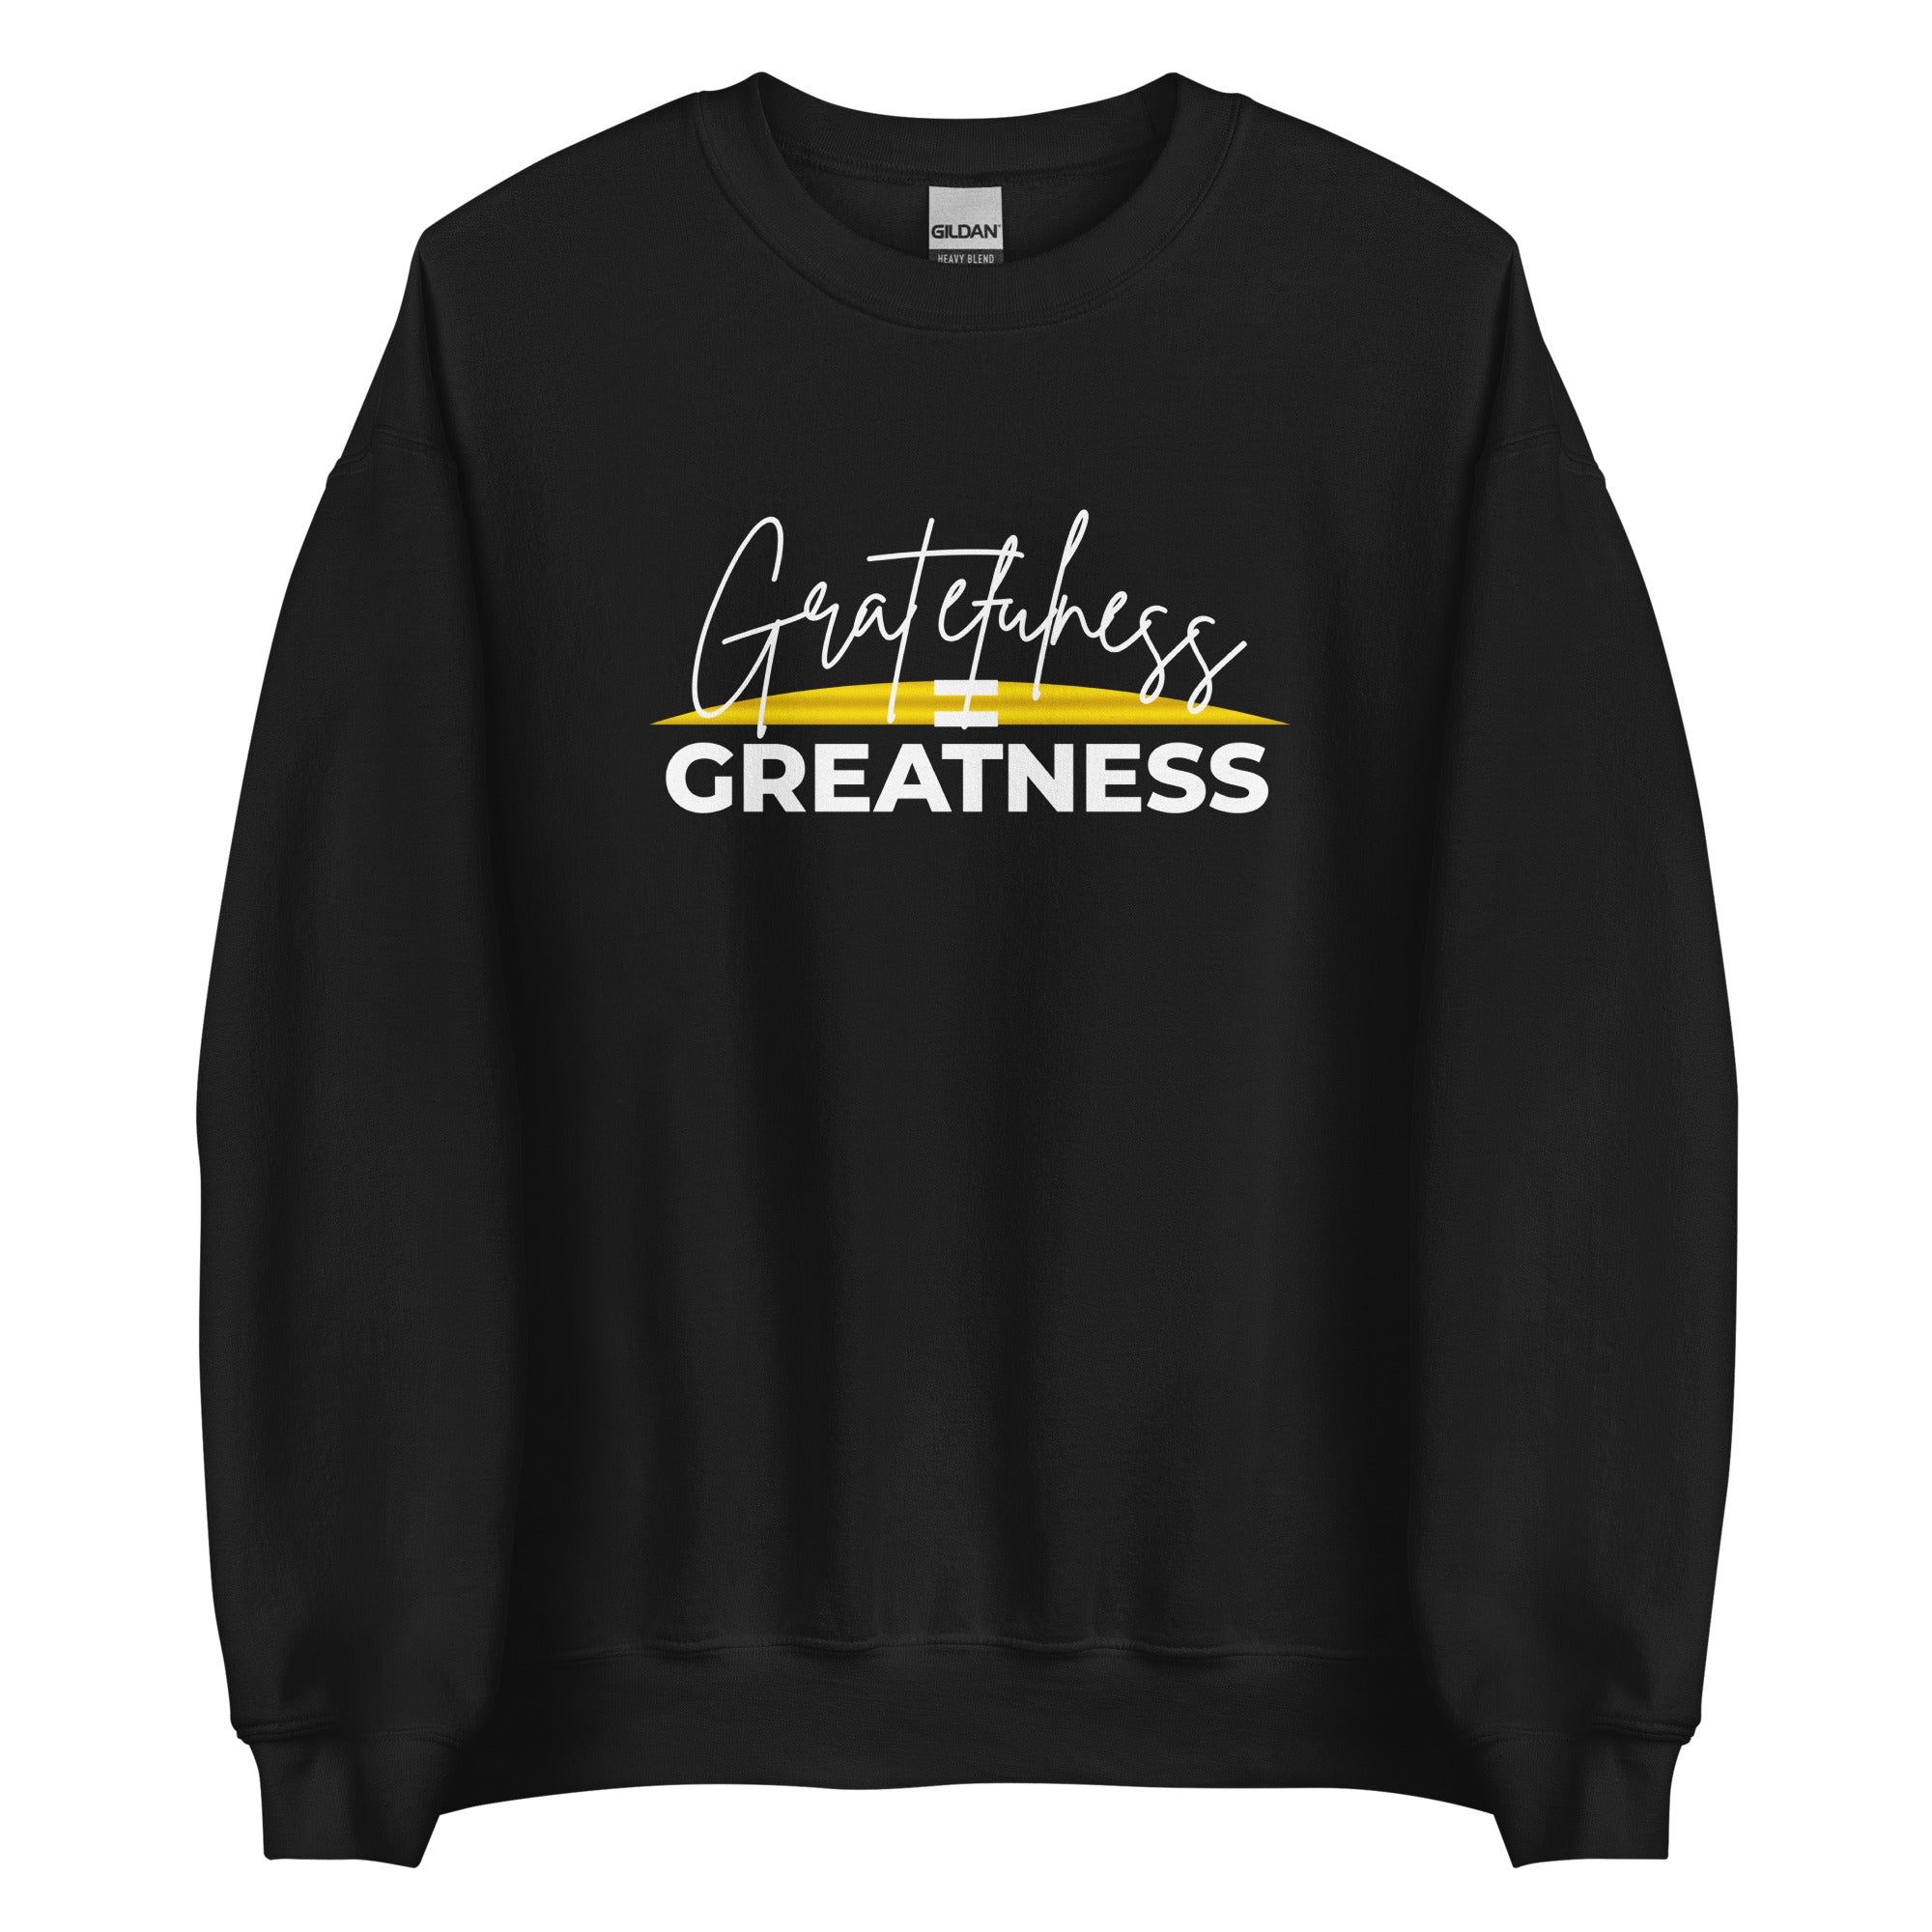 Gratefulness = Greatness Unisex Sweatshirt